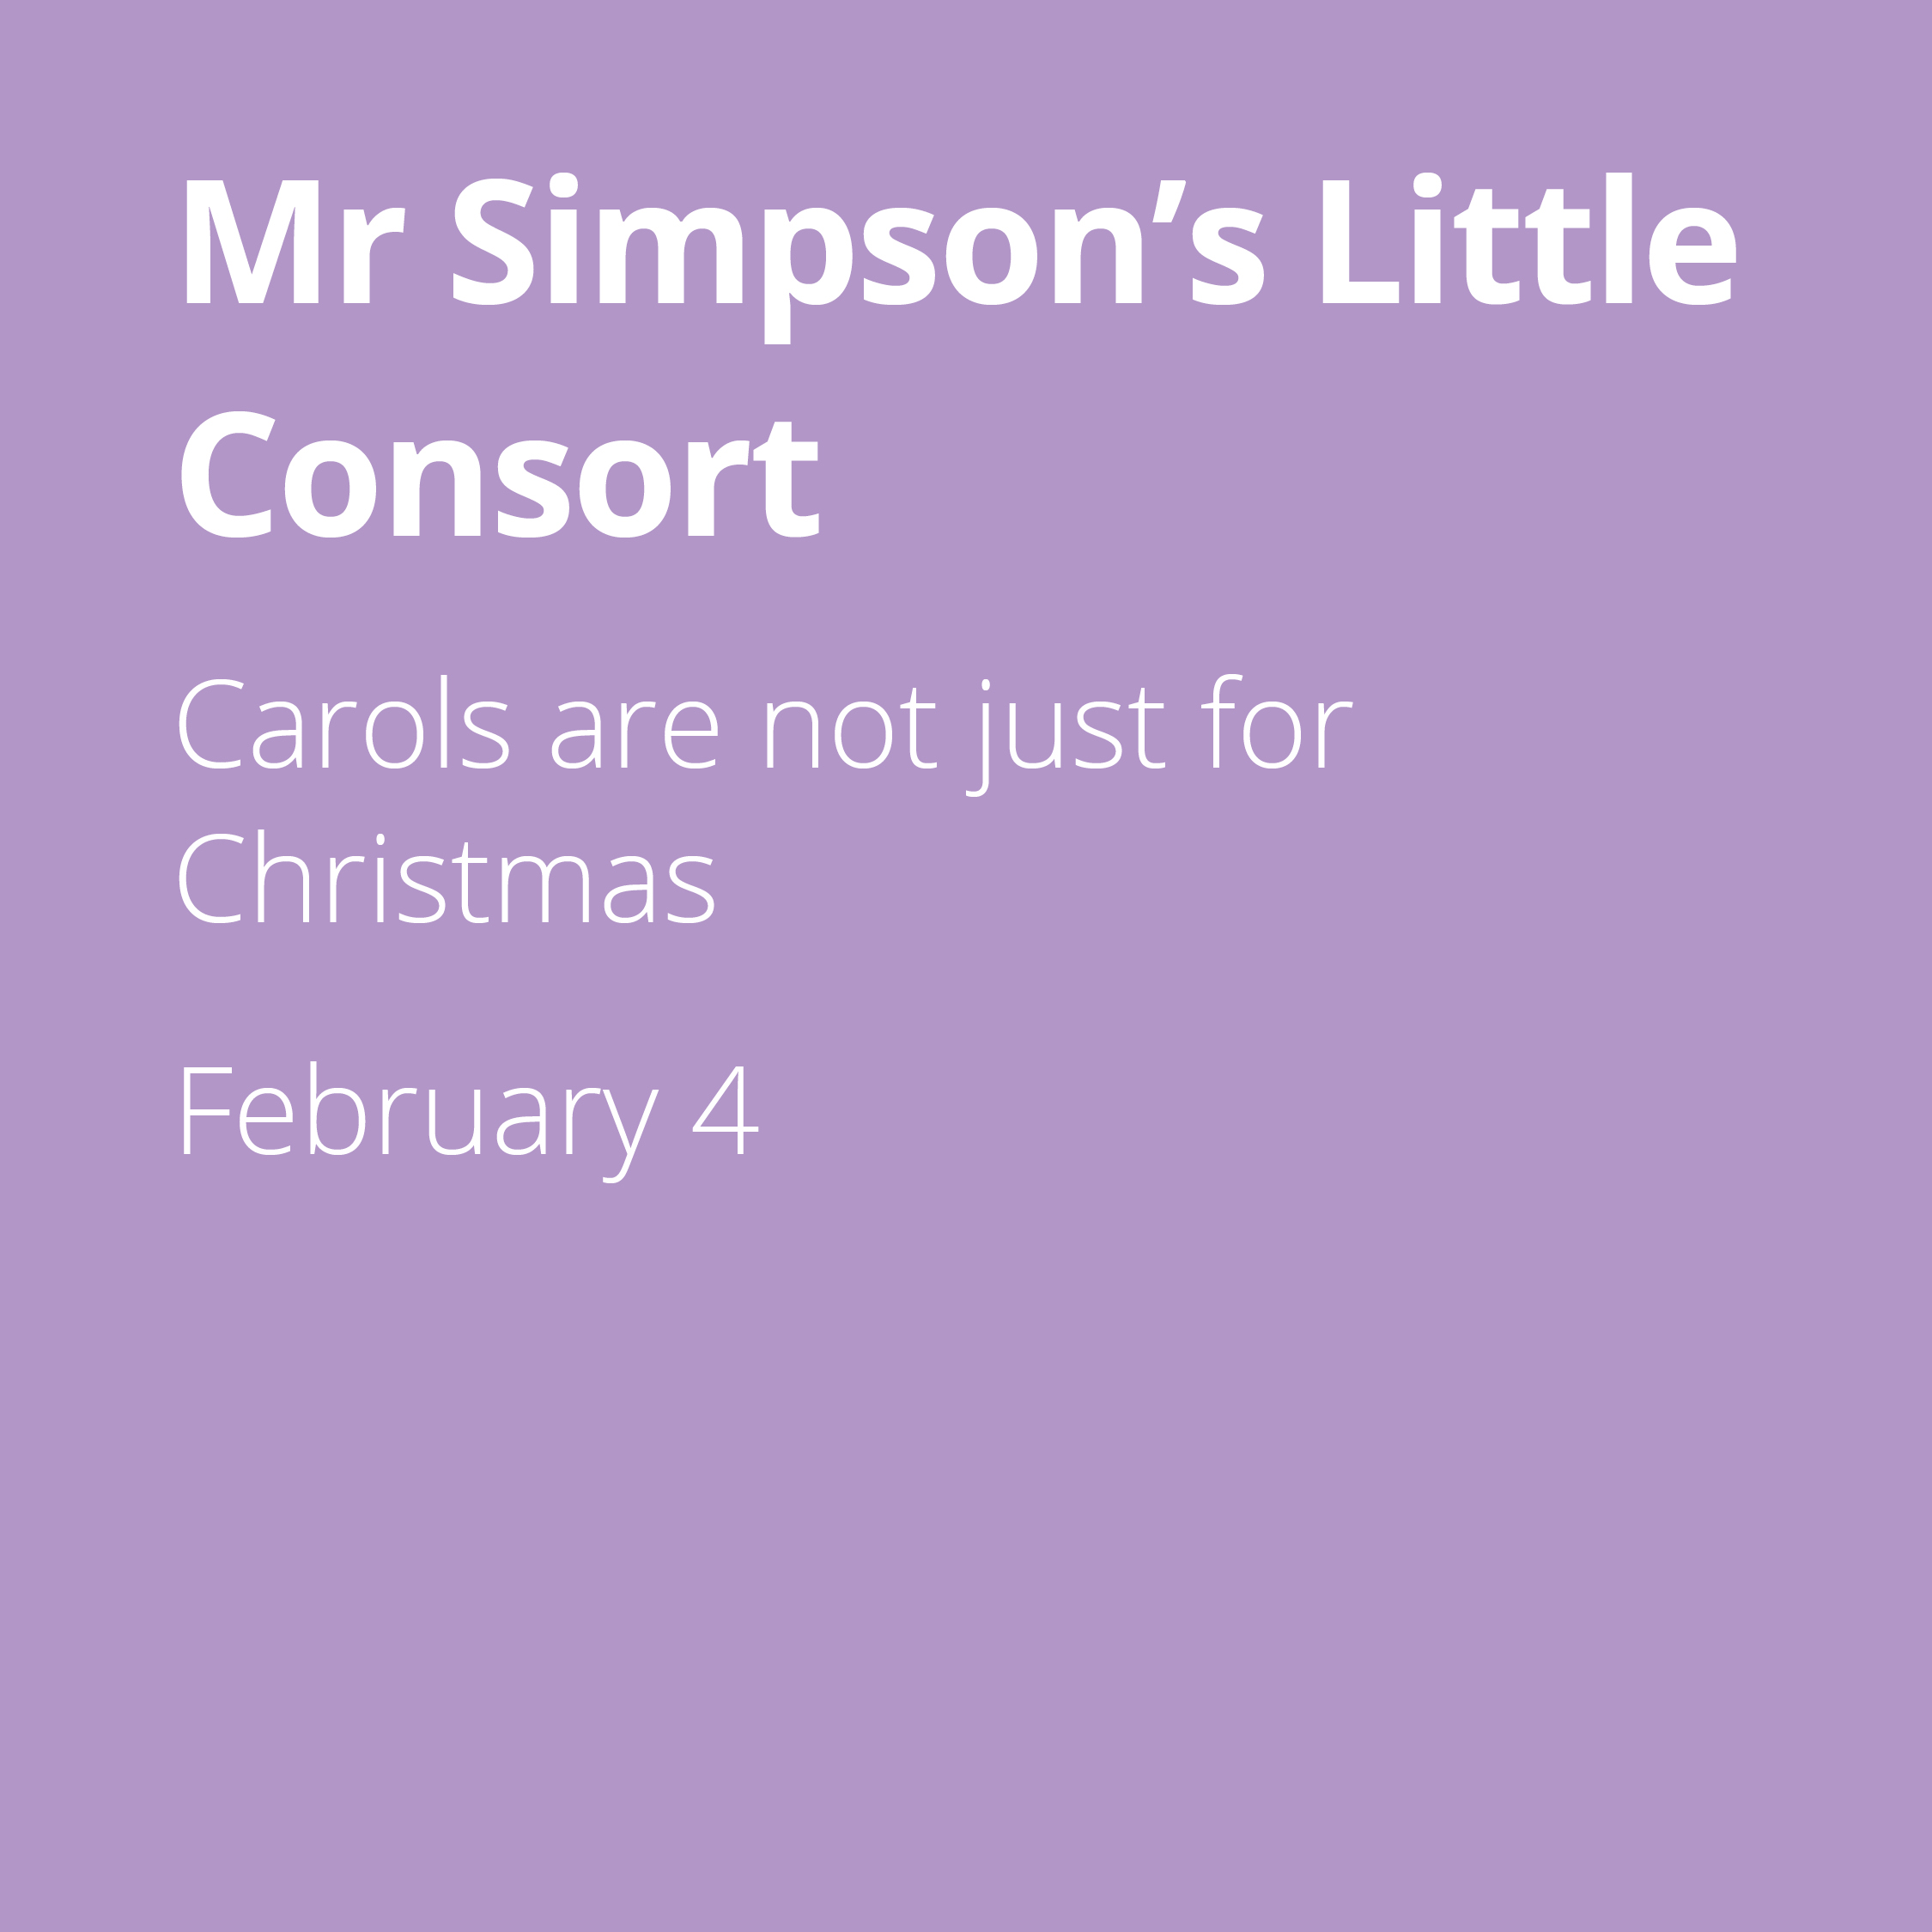 Mr Simpson’s Little Consort